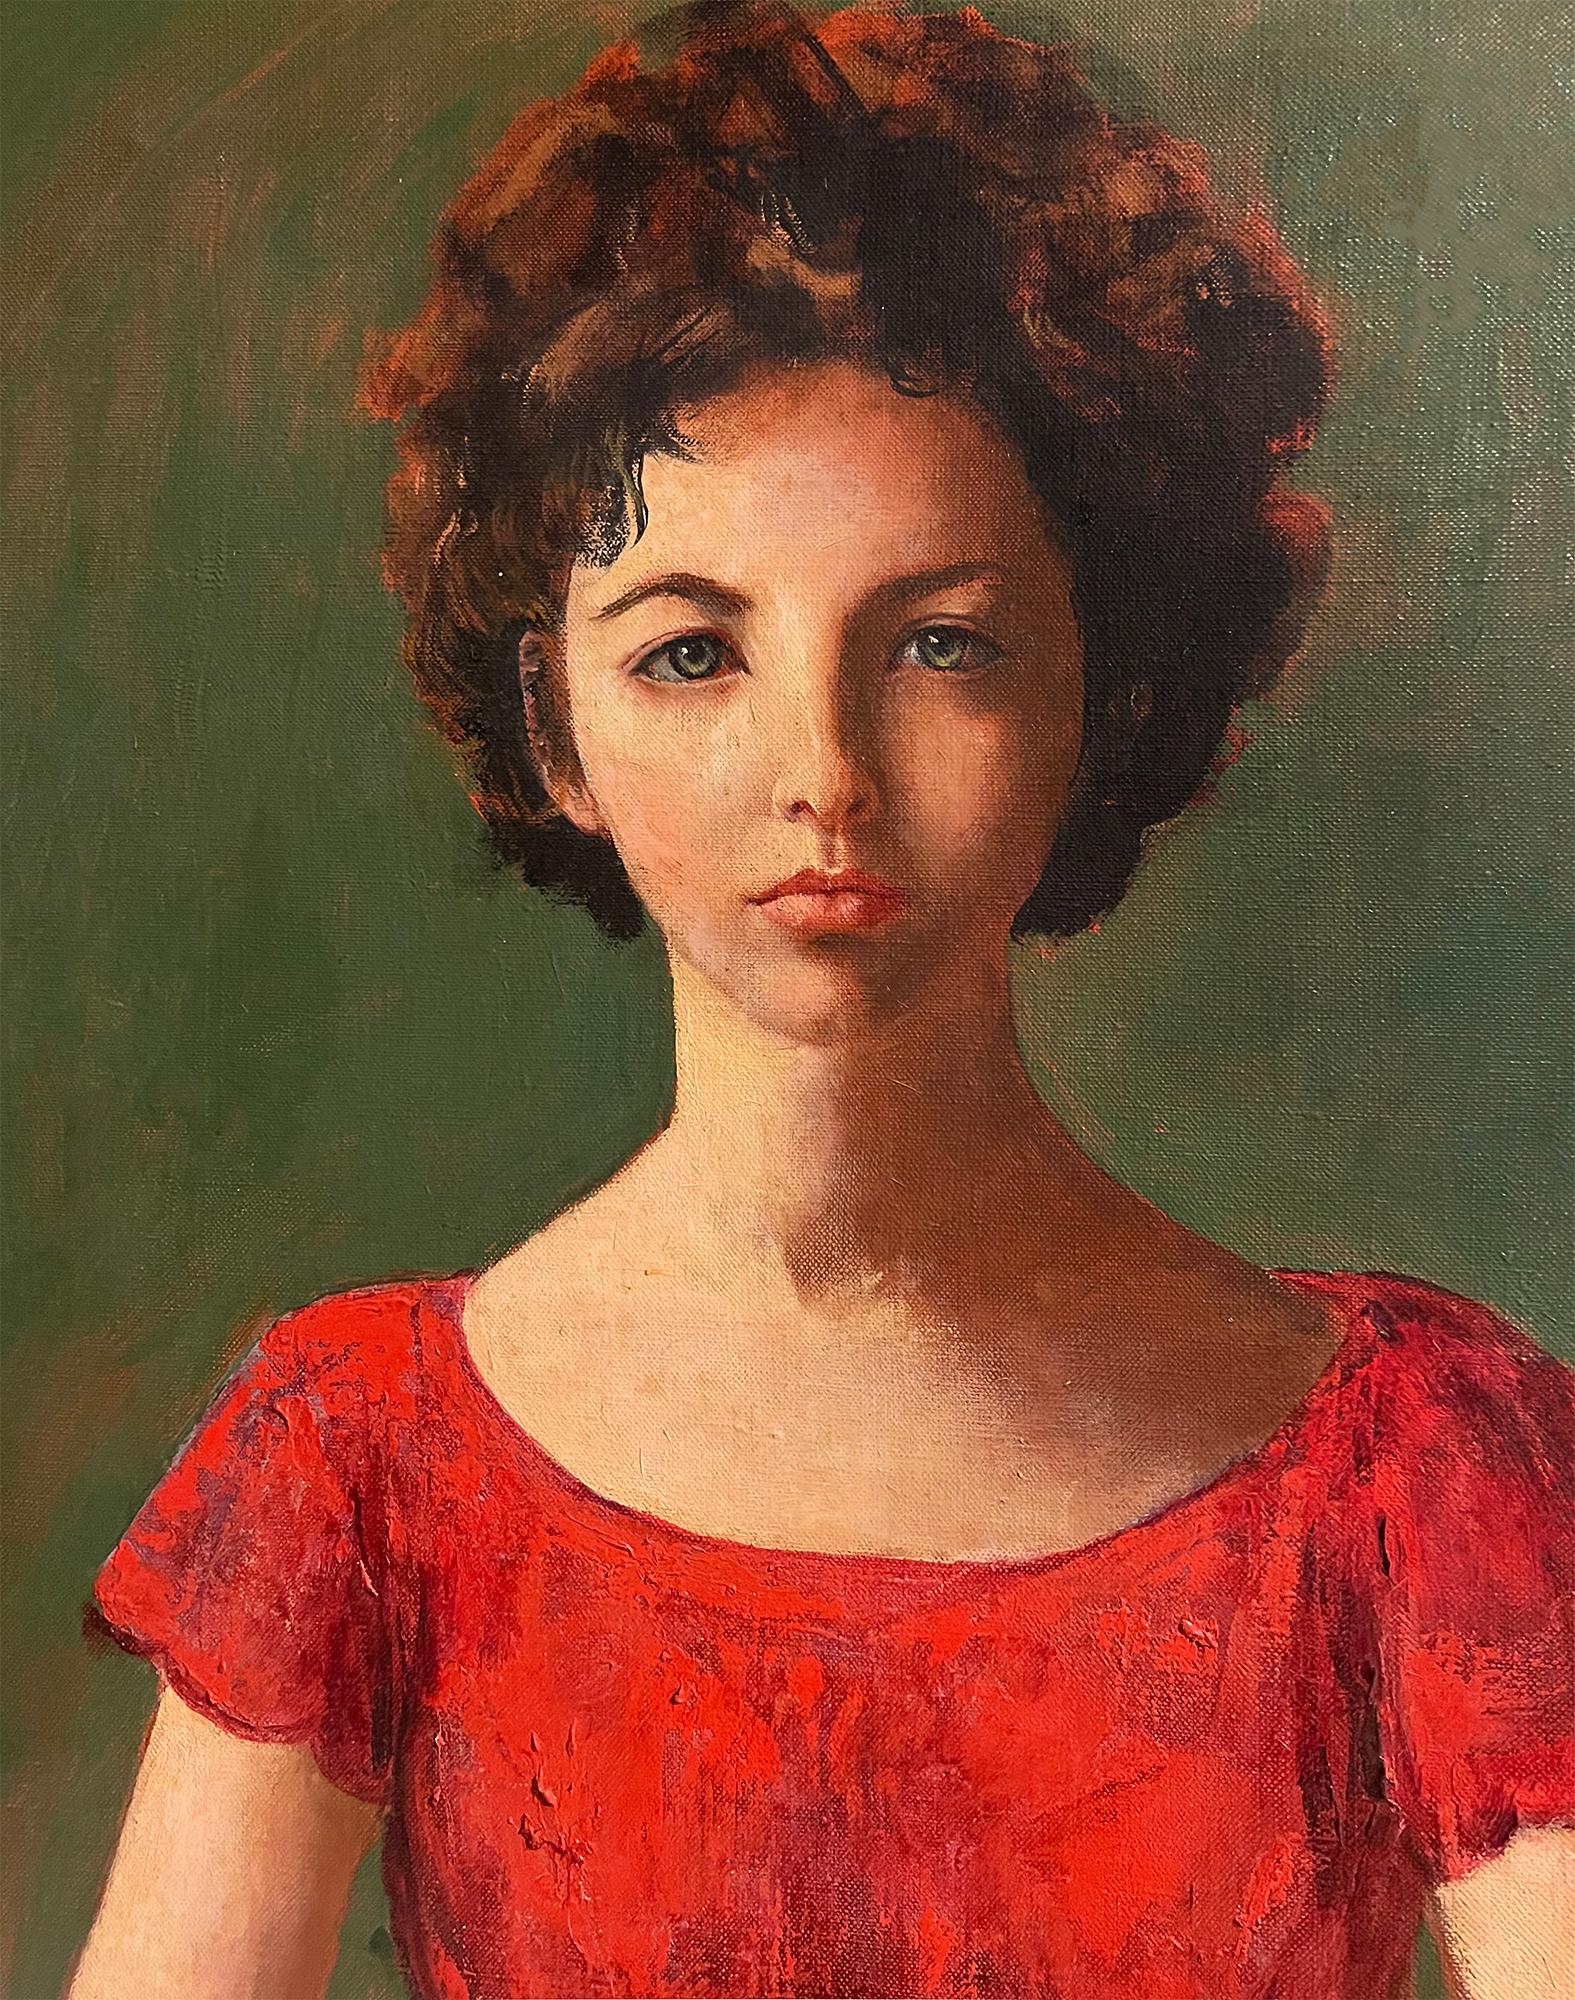 Woman in a Red Dress, Mid Century Female Illustrator/ Artist, Elizabeth Taylor ? For Sale 7